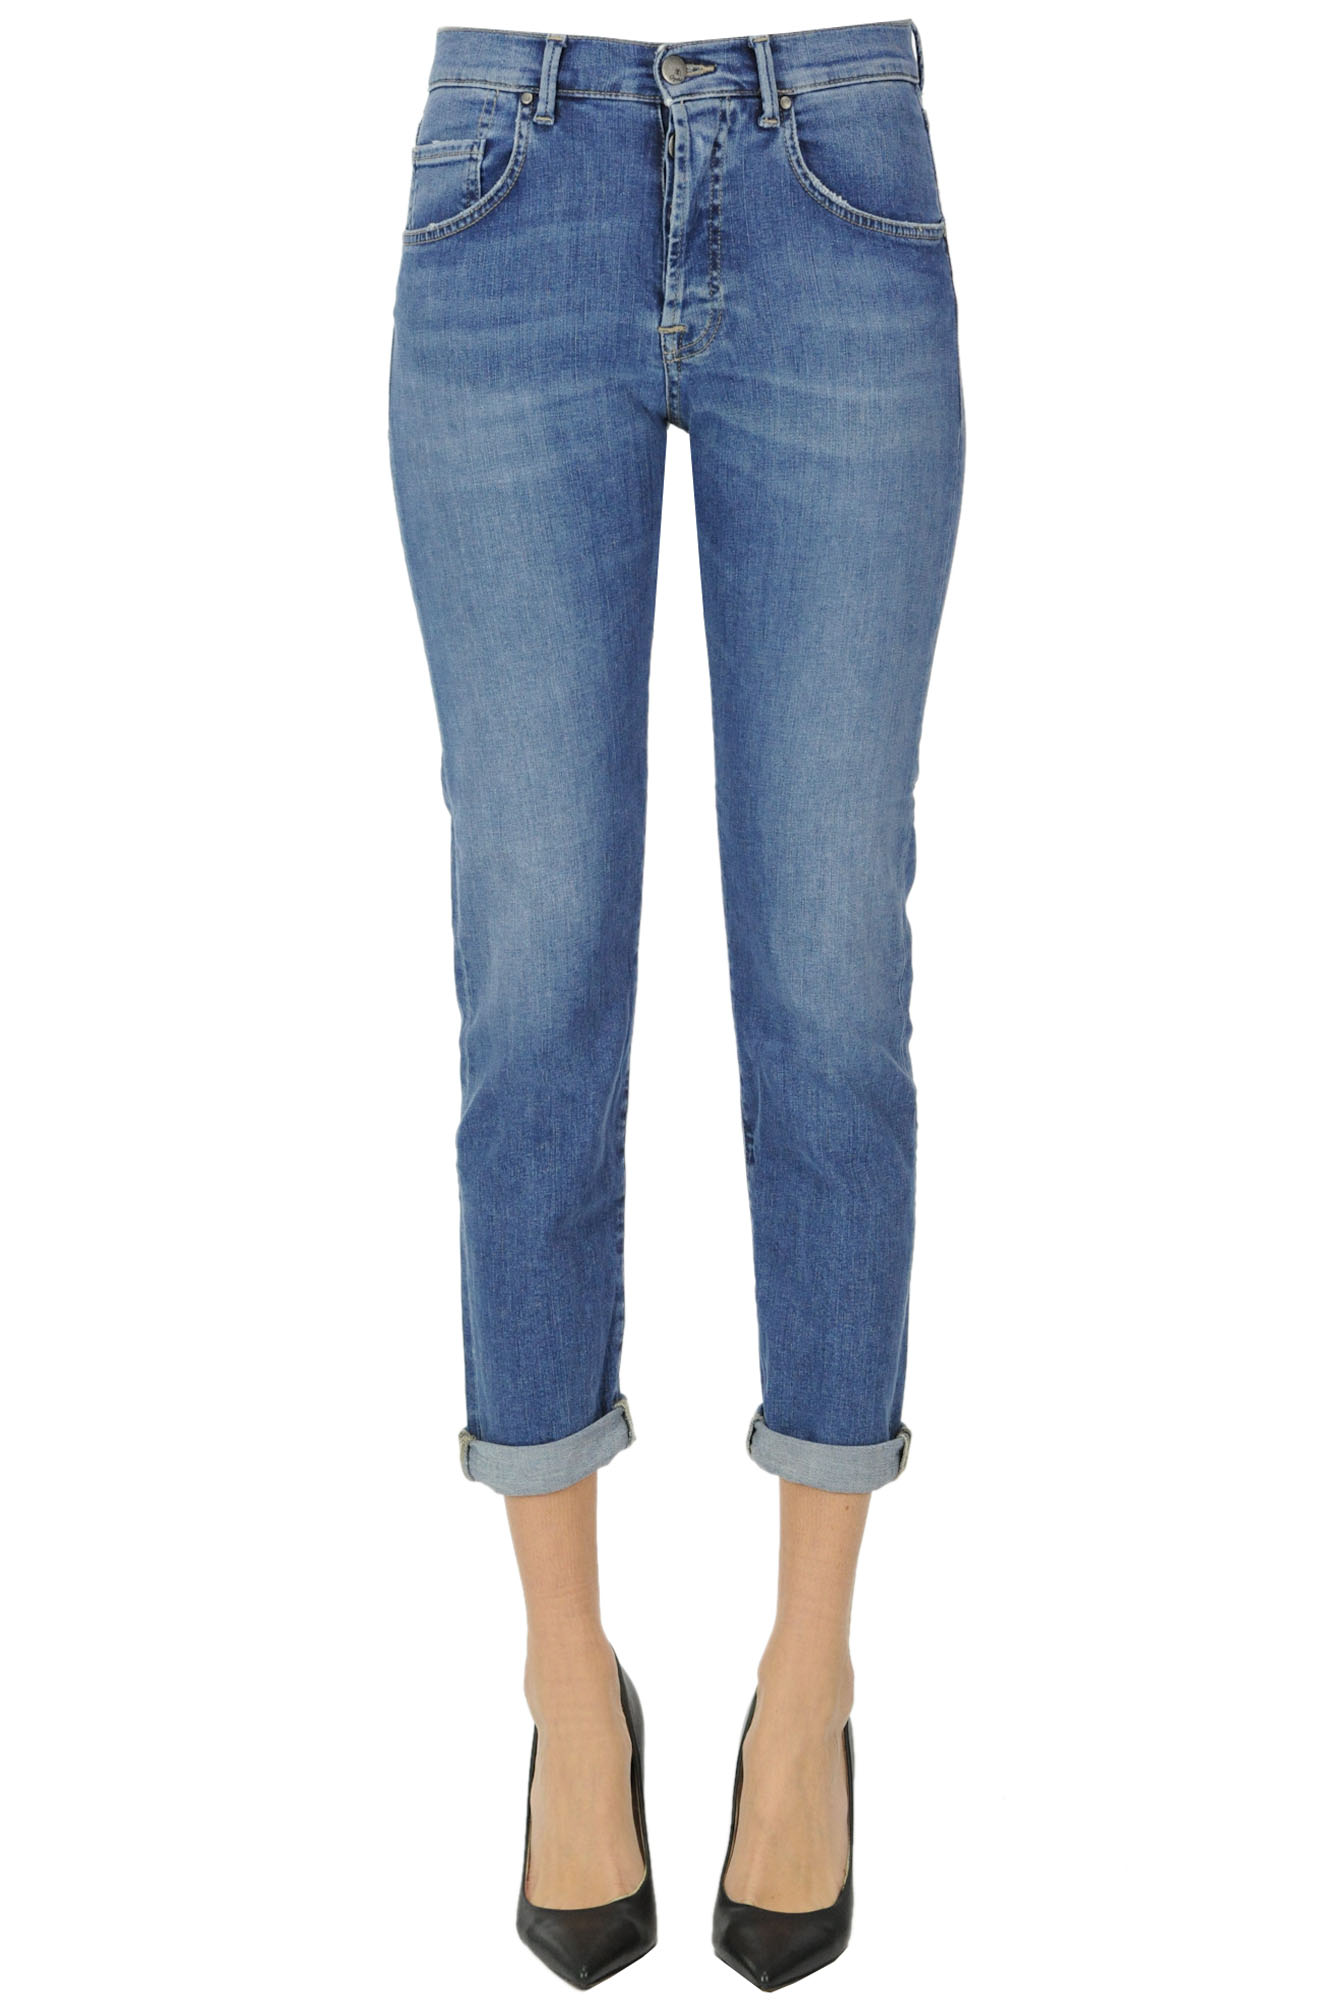 Atelier Cigala's Cropped Slim Jeans In Light Denim